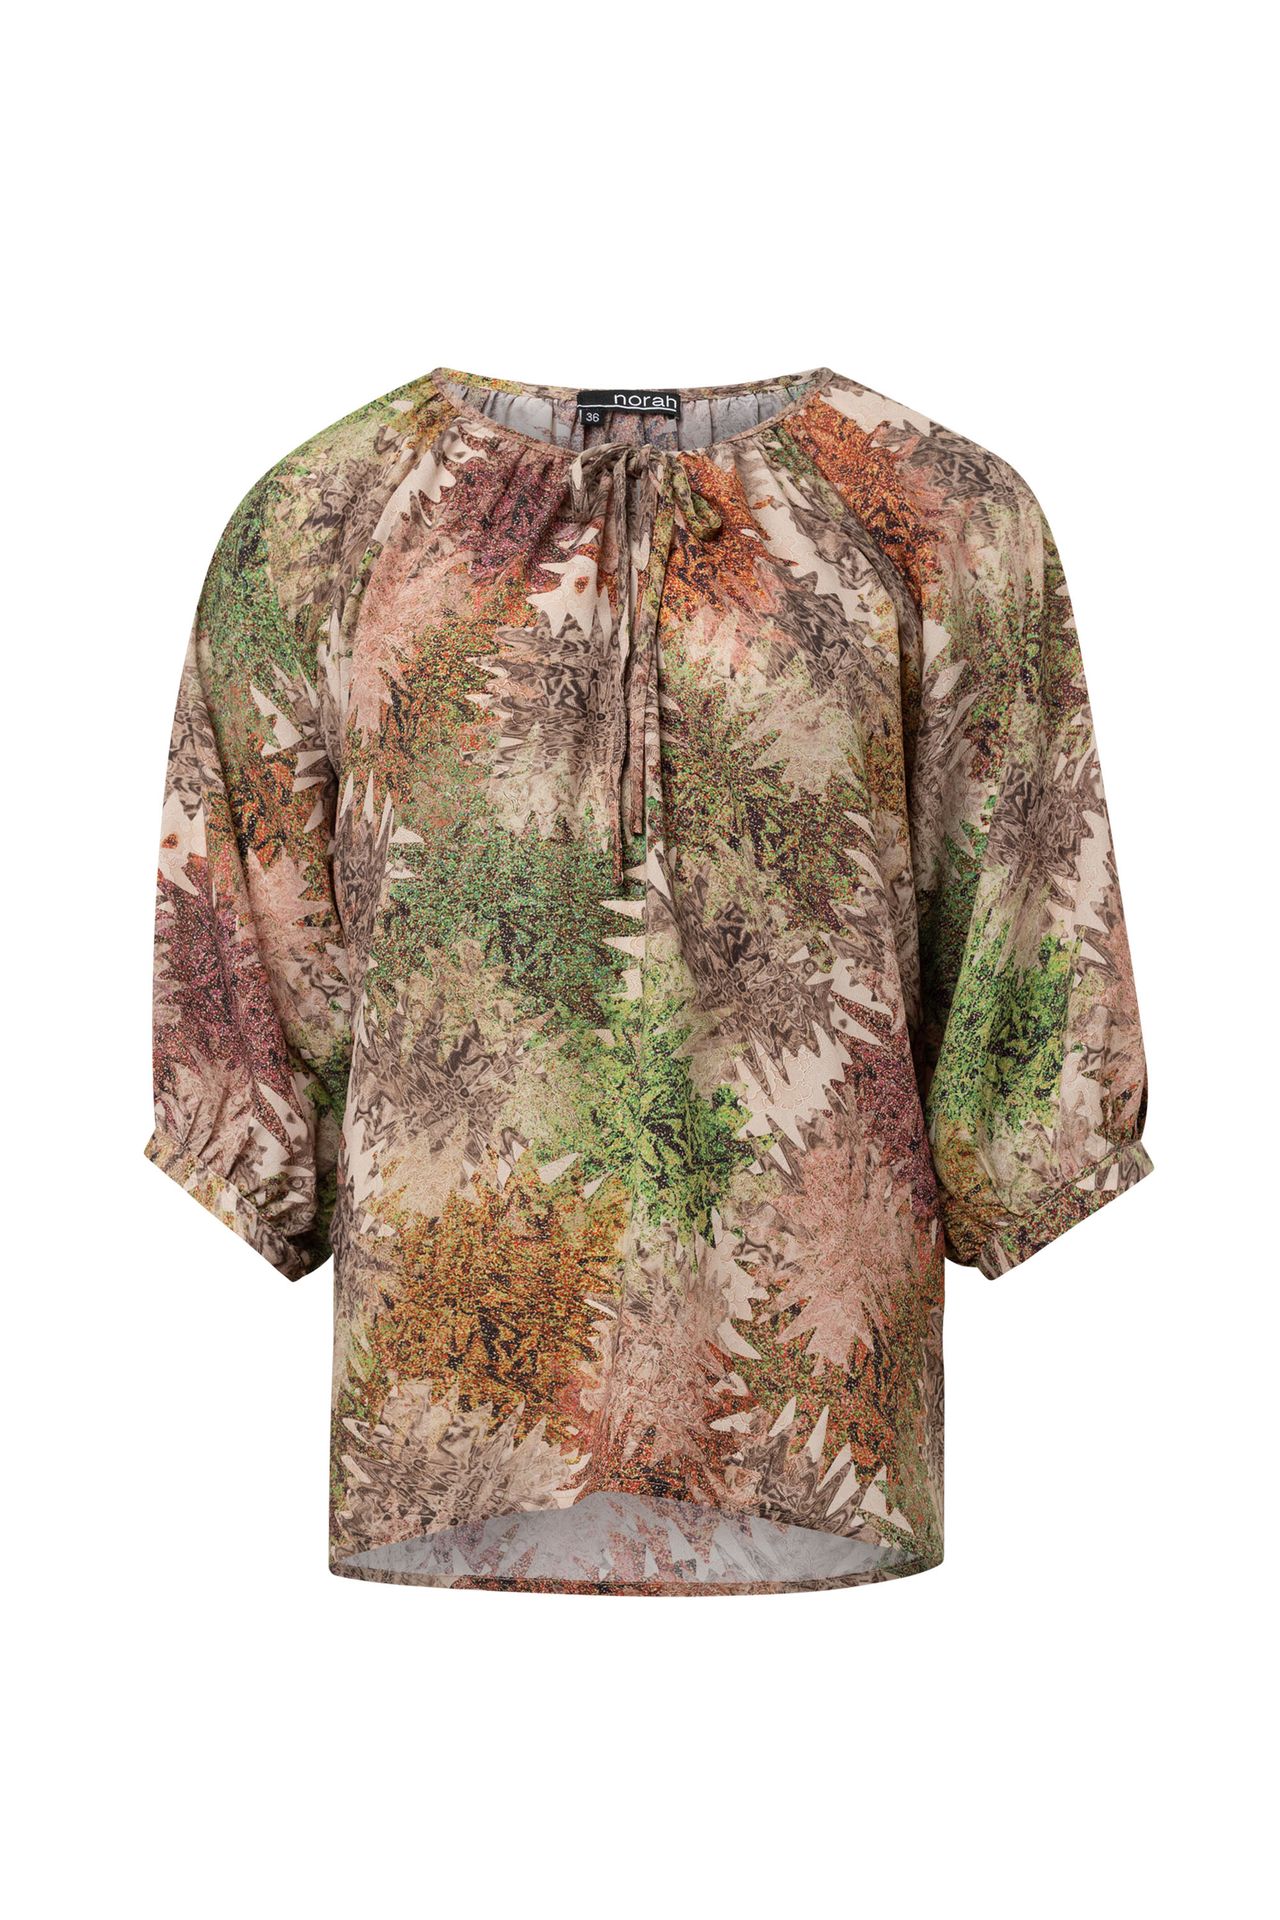  Meerkleurige blouse sand multicolor 214368-121-44